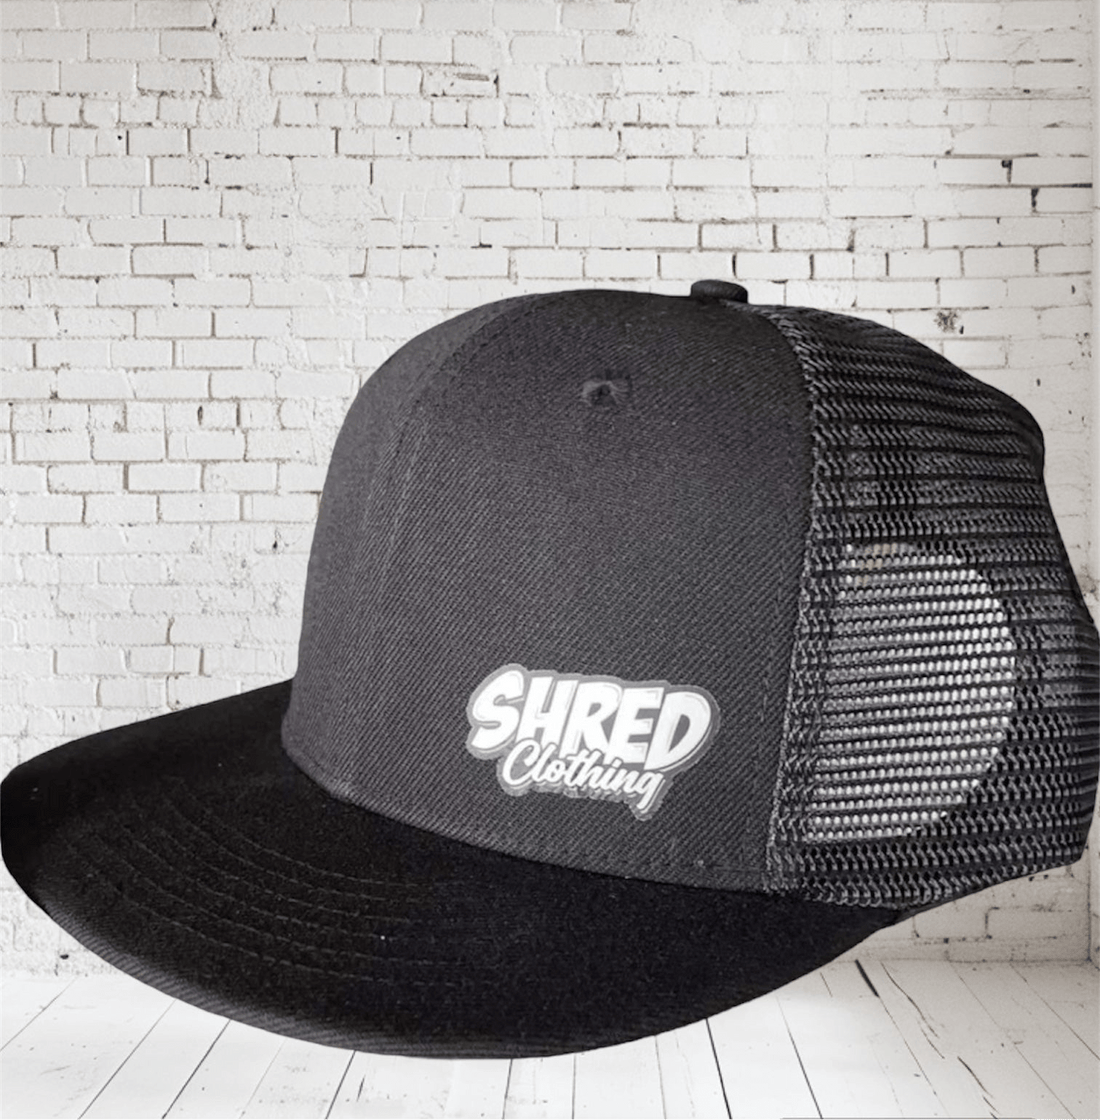 Flat Cap - Shred Clothing